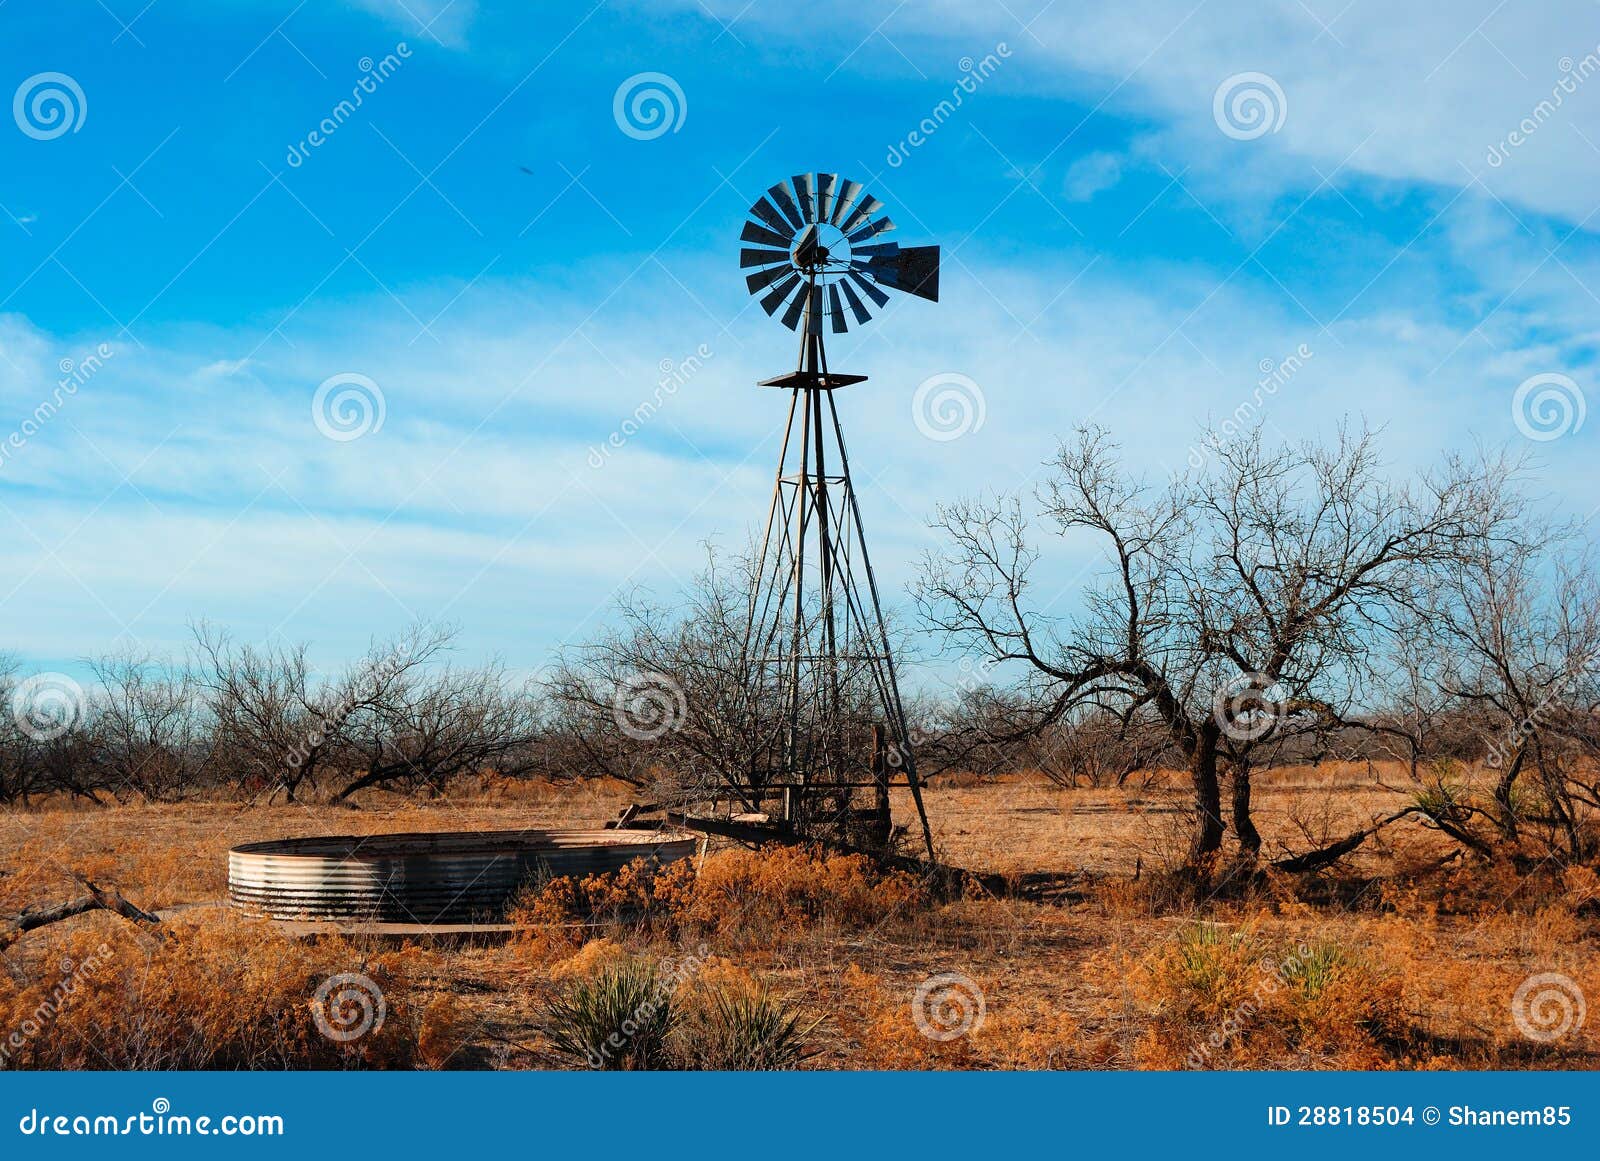 Water windmill in rural Oklahoma.